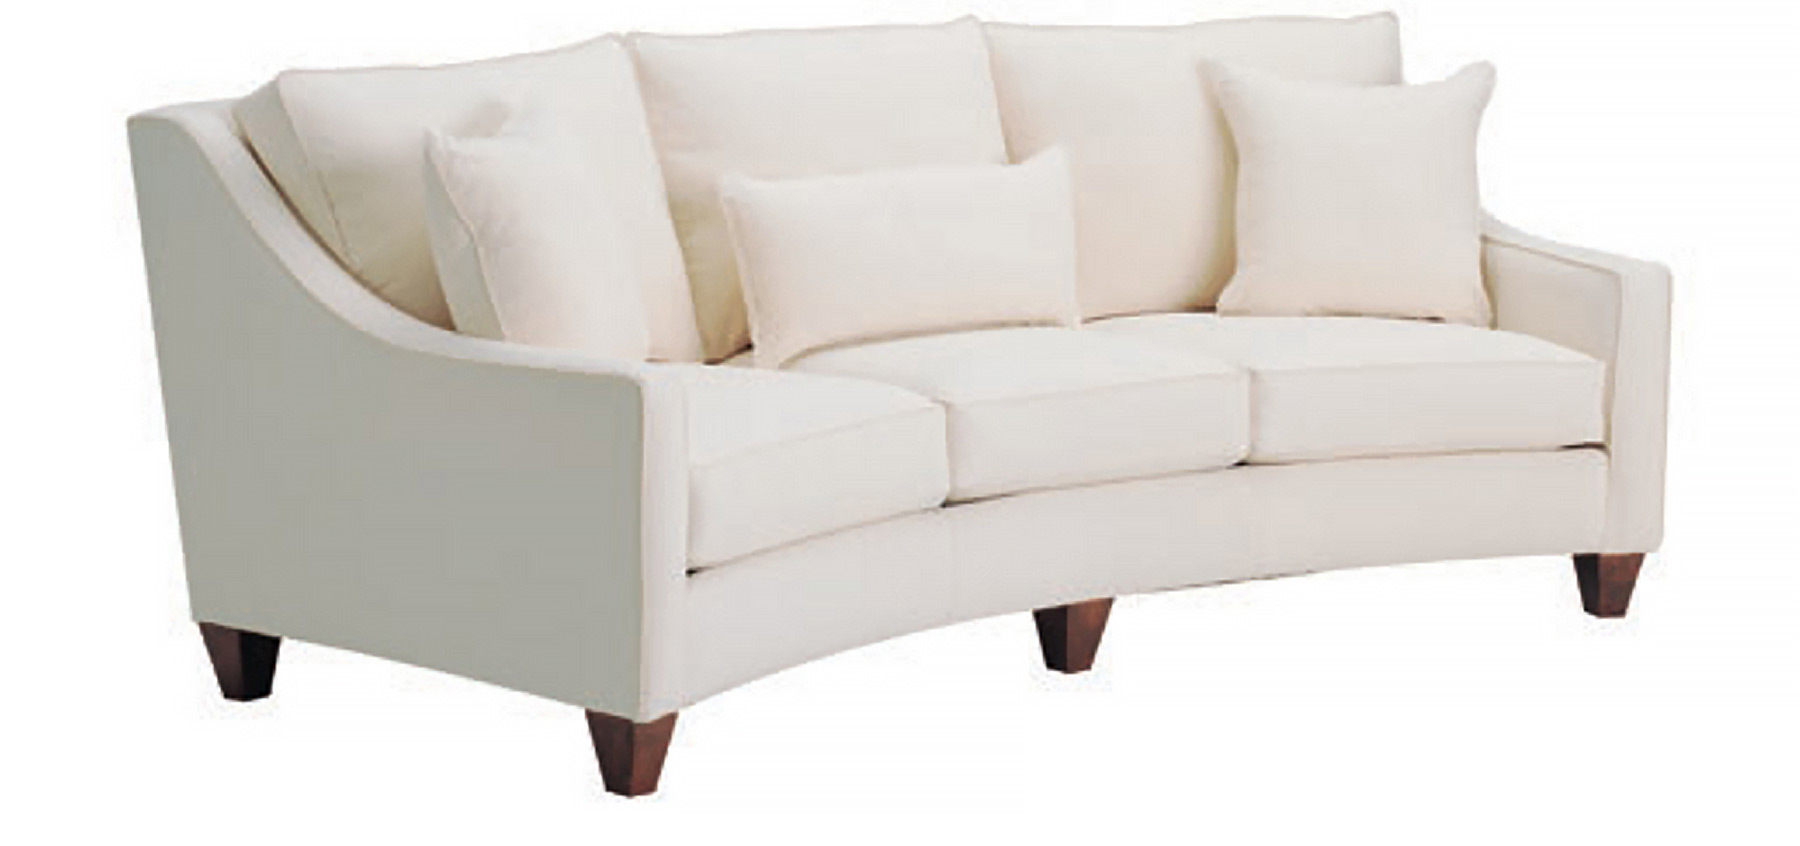 The Sandy Curved Sofa Portland Furniture